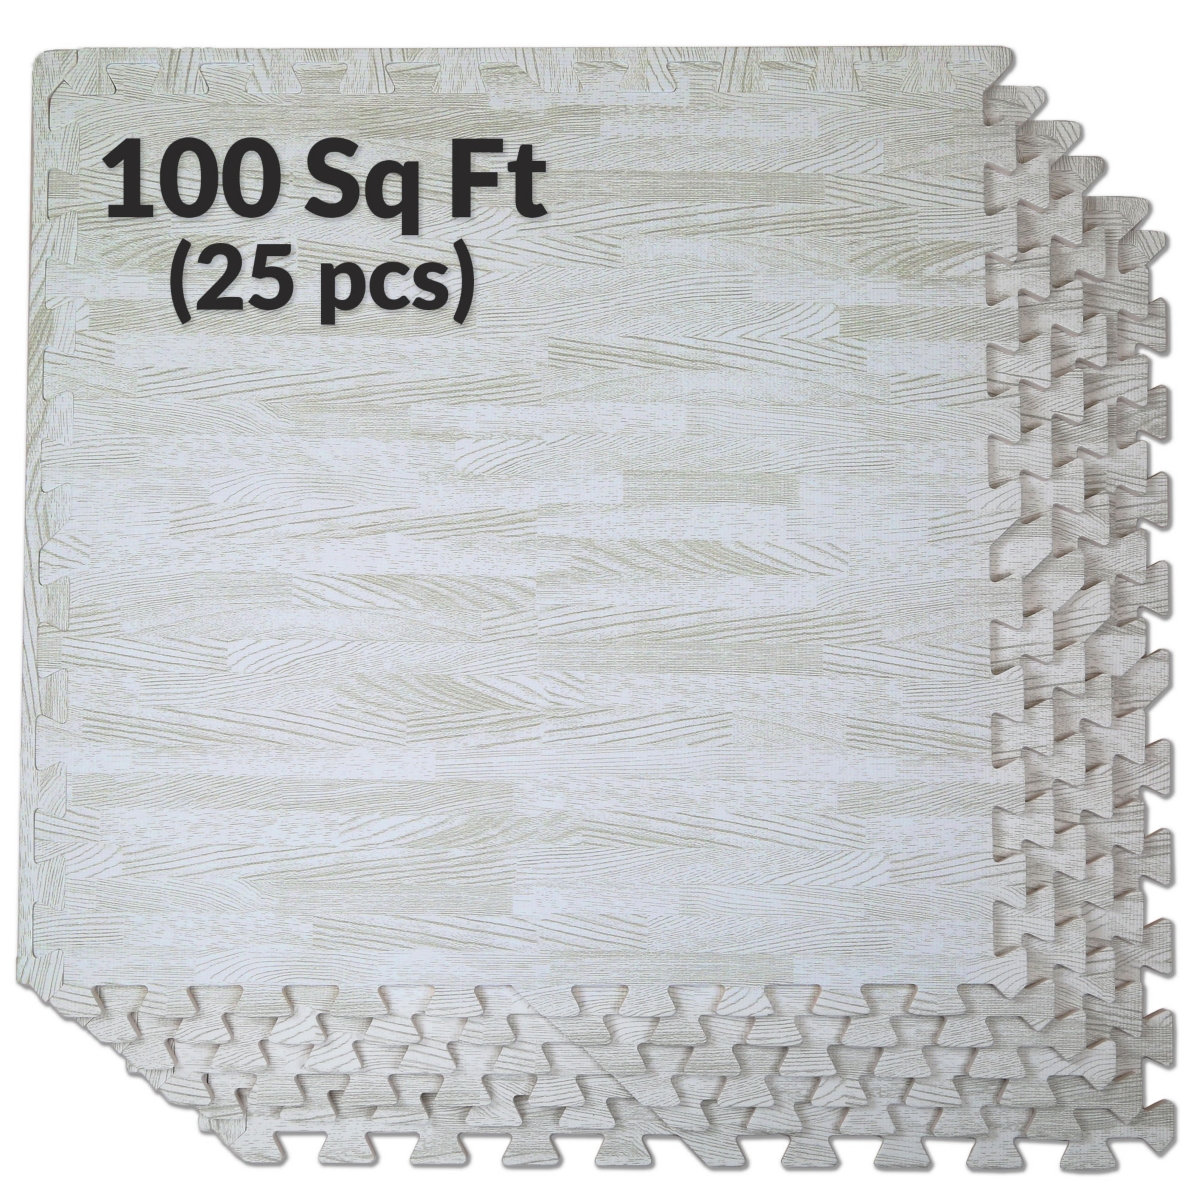 100 SqFt 3/8" White Wood Grain Foam Mat Interlocking Flooring 2'X2' 25pcs - Grey